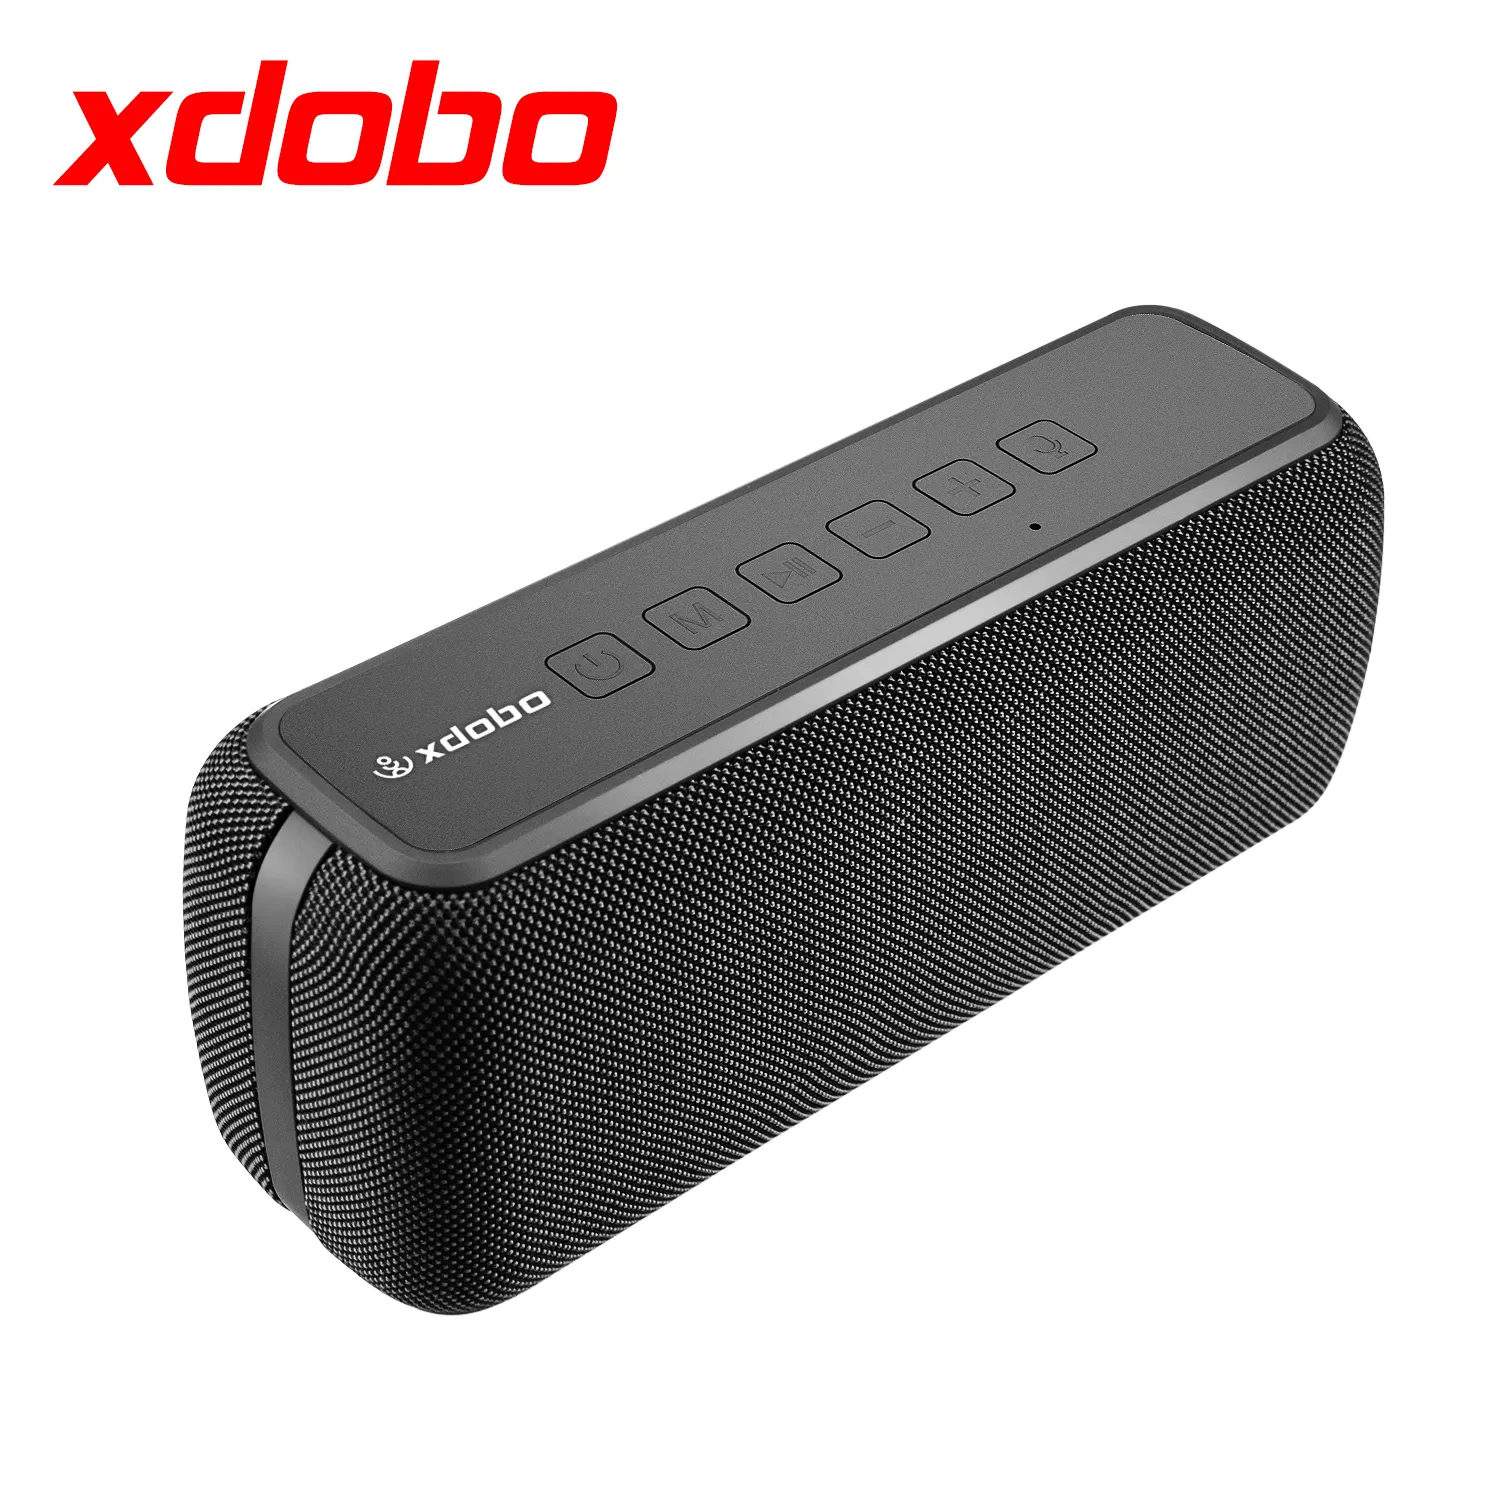 Xdobo-altavoz portátil X8 de 60w, altavoz inalámbrico de sonido de graves, USB, para exteriores, OEM, para sony